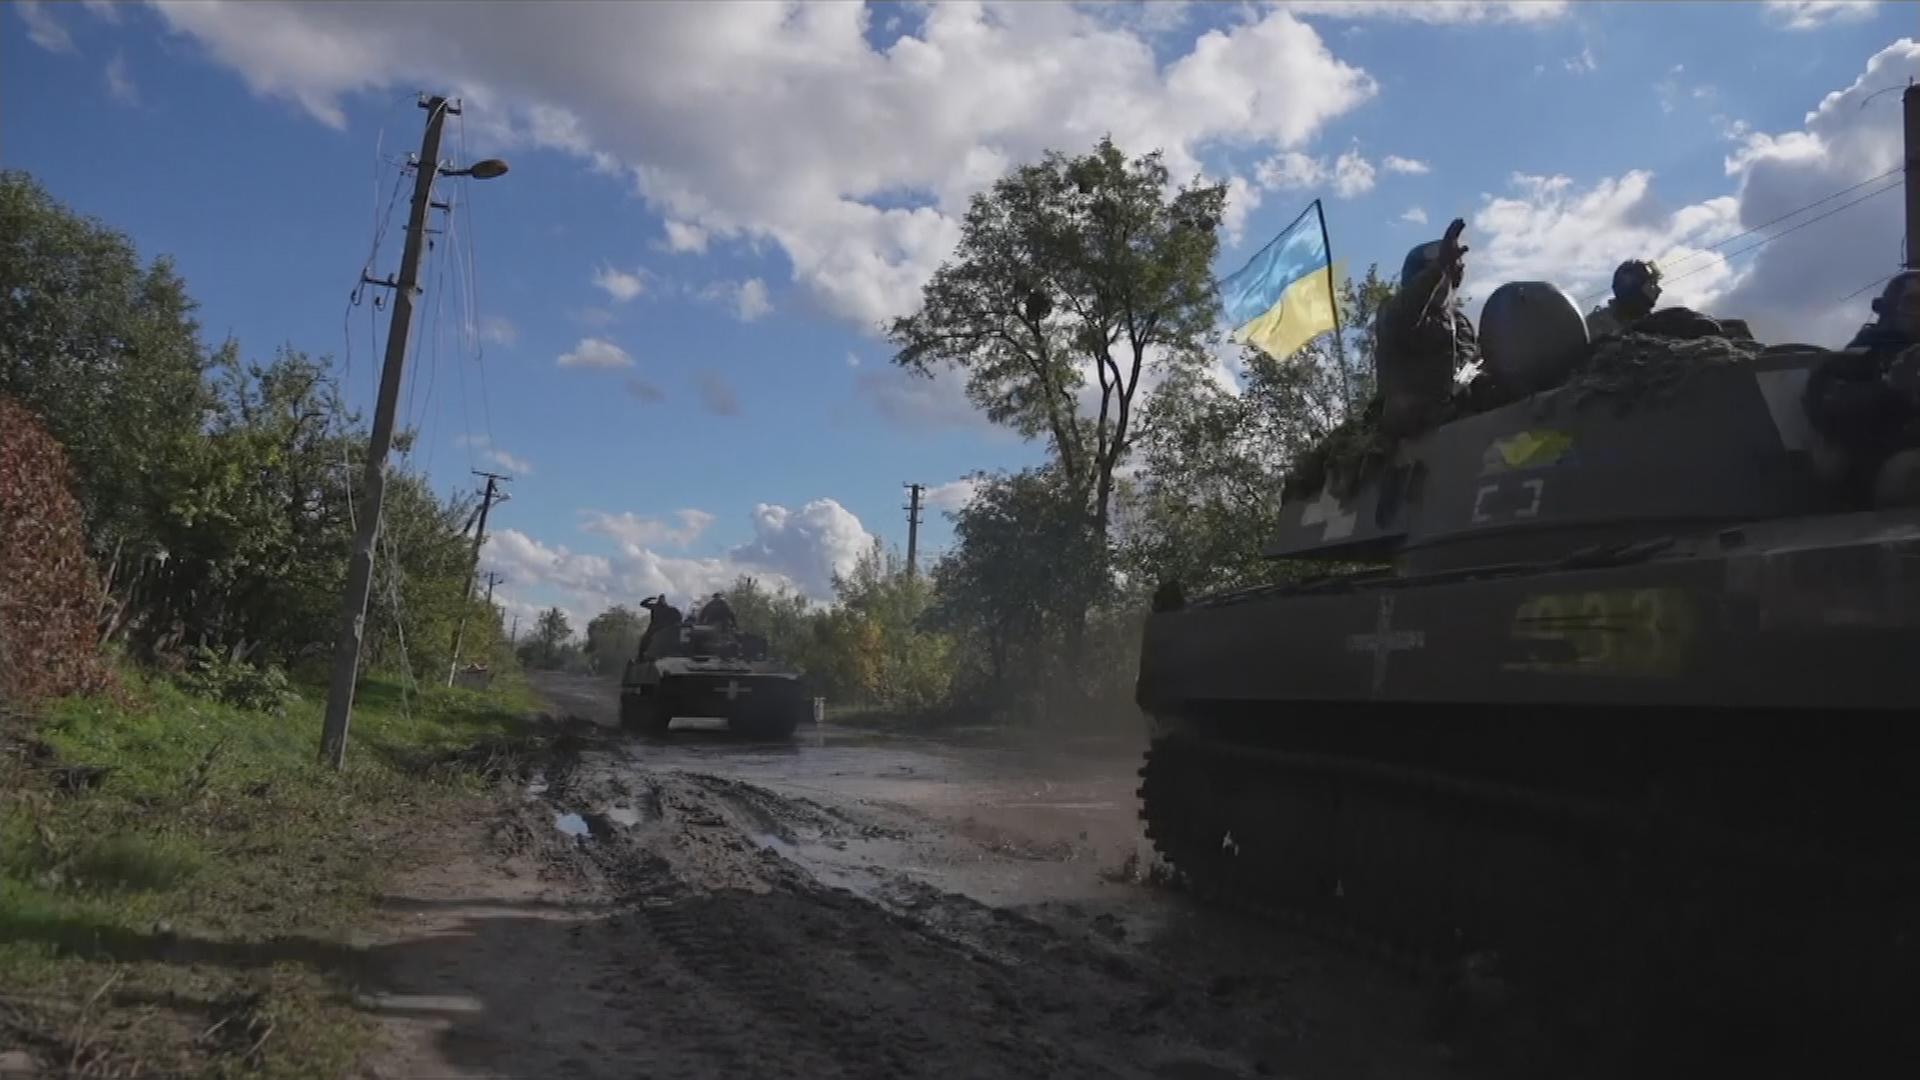 Tank with flag of Ukraine